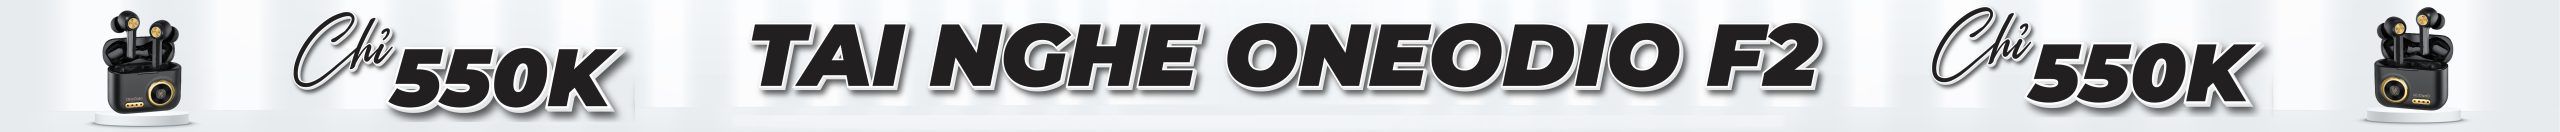 OneOdio F1